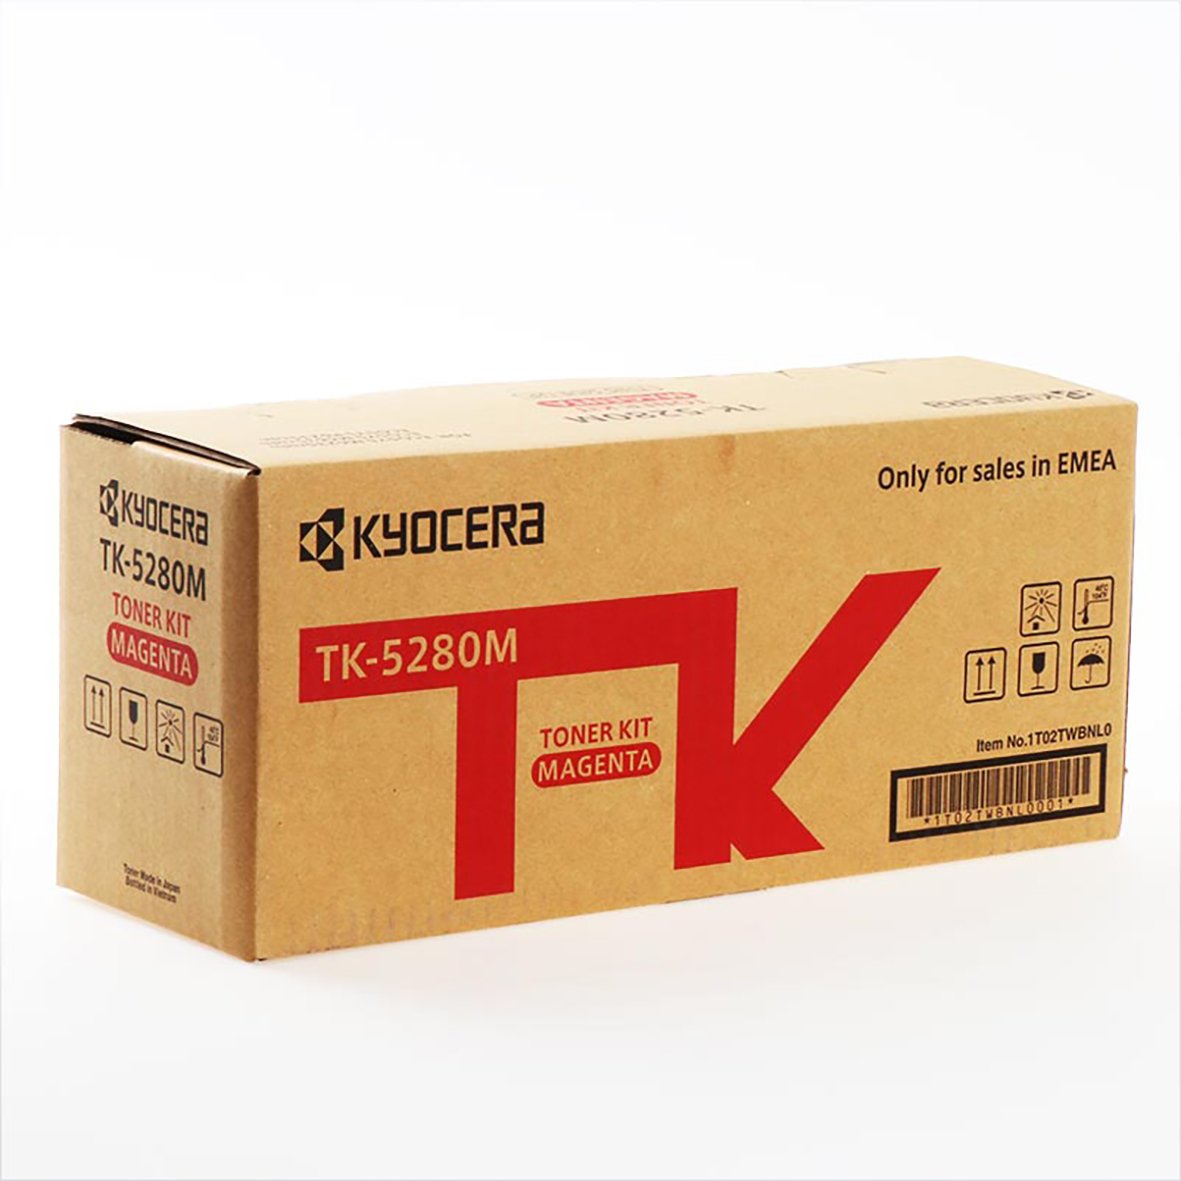 Toner Kit Kyocera 11000sid TK-5280M magenta